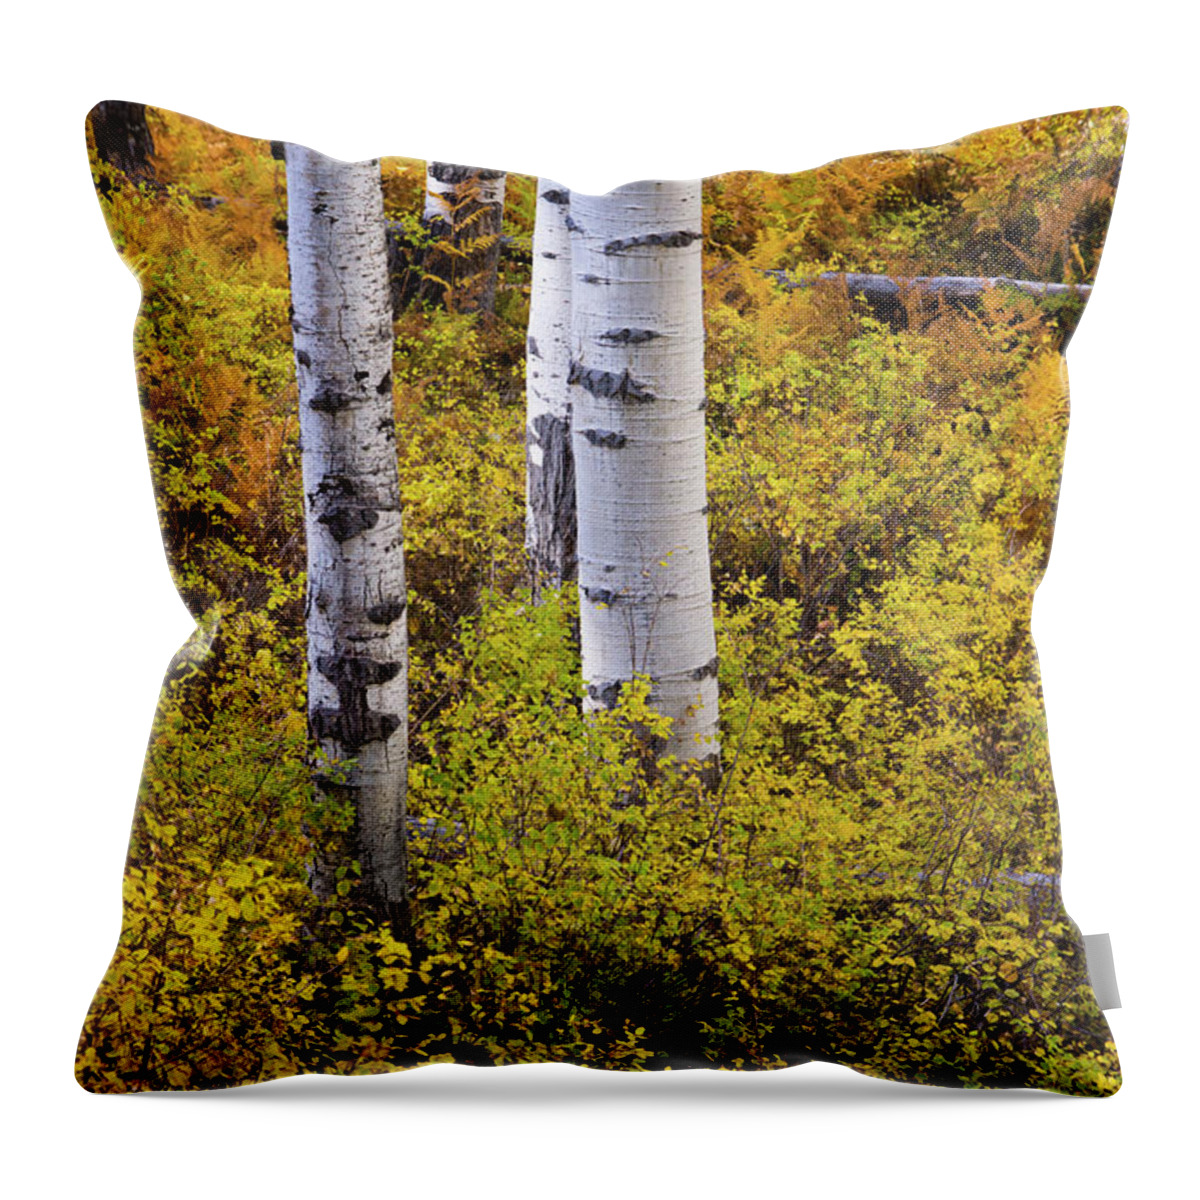 America Throw Pillow featuring the photograph Autumn Contrasts by John De Bord